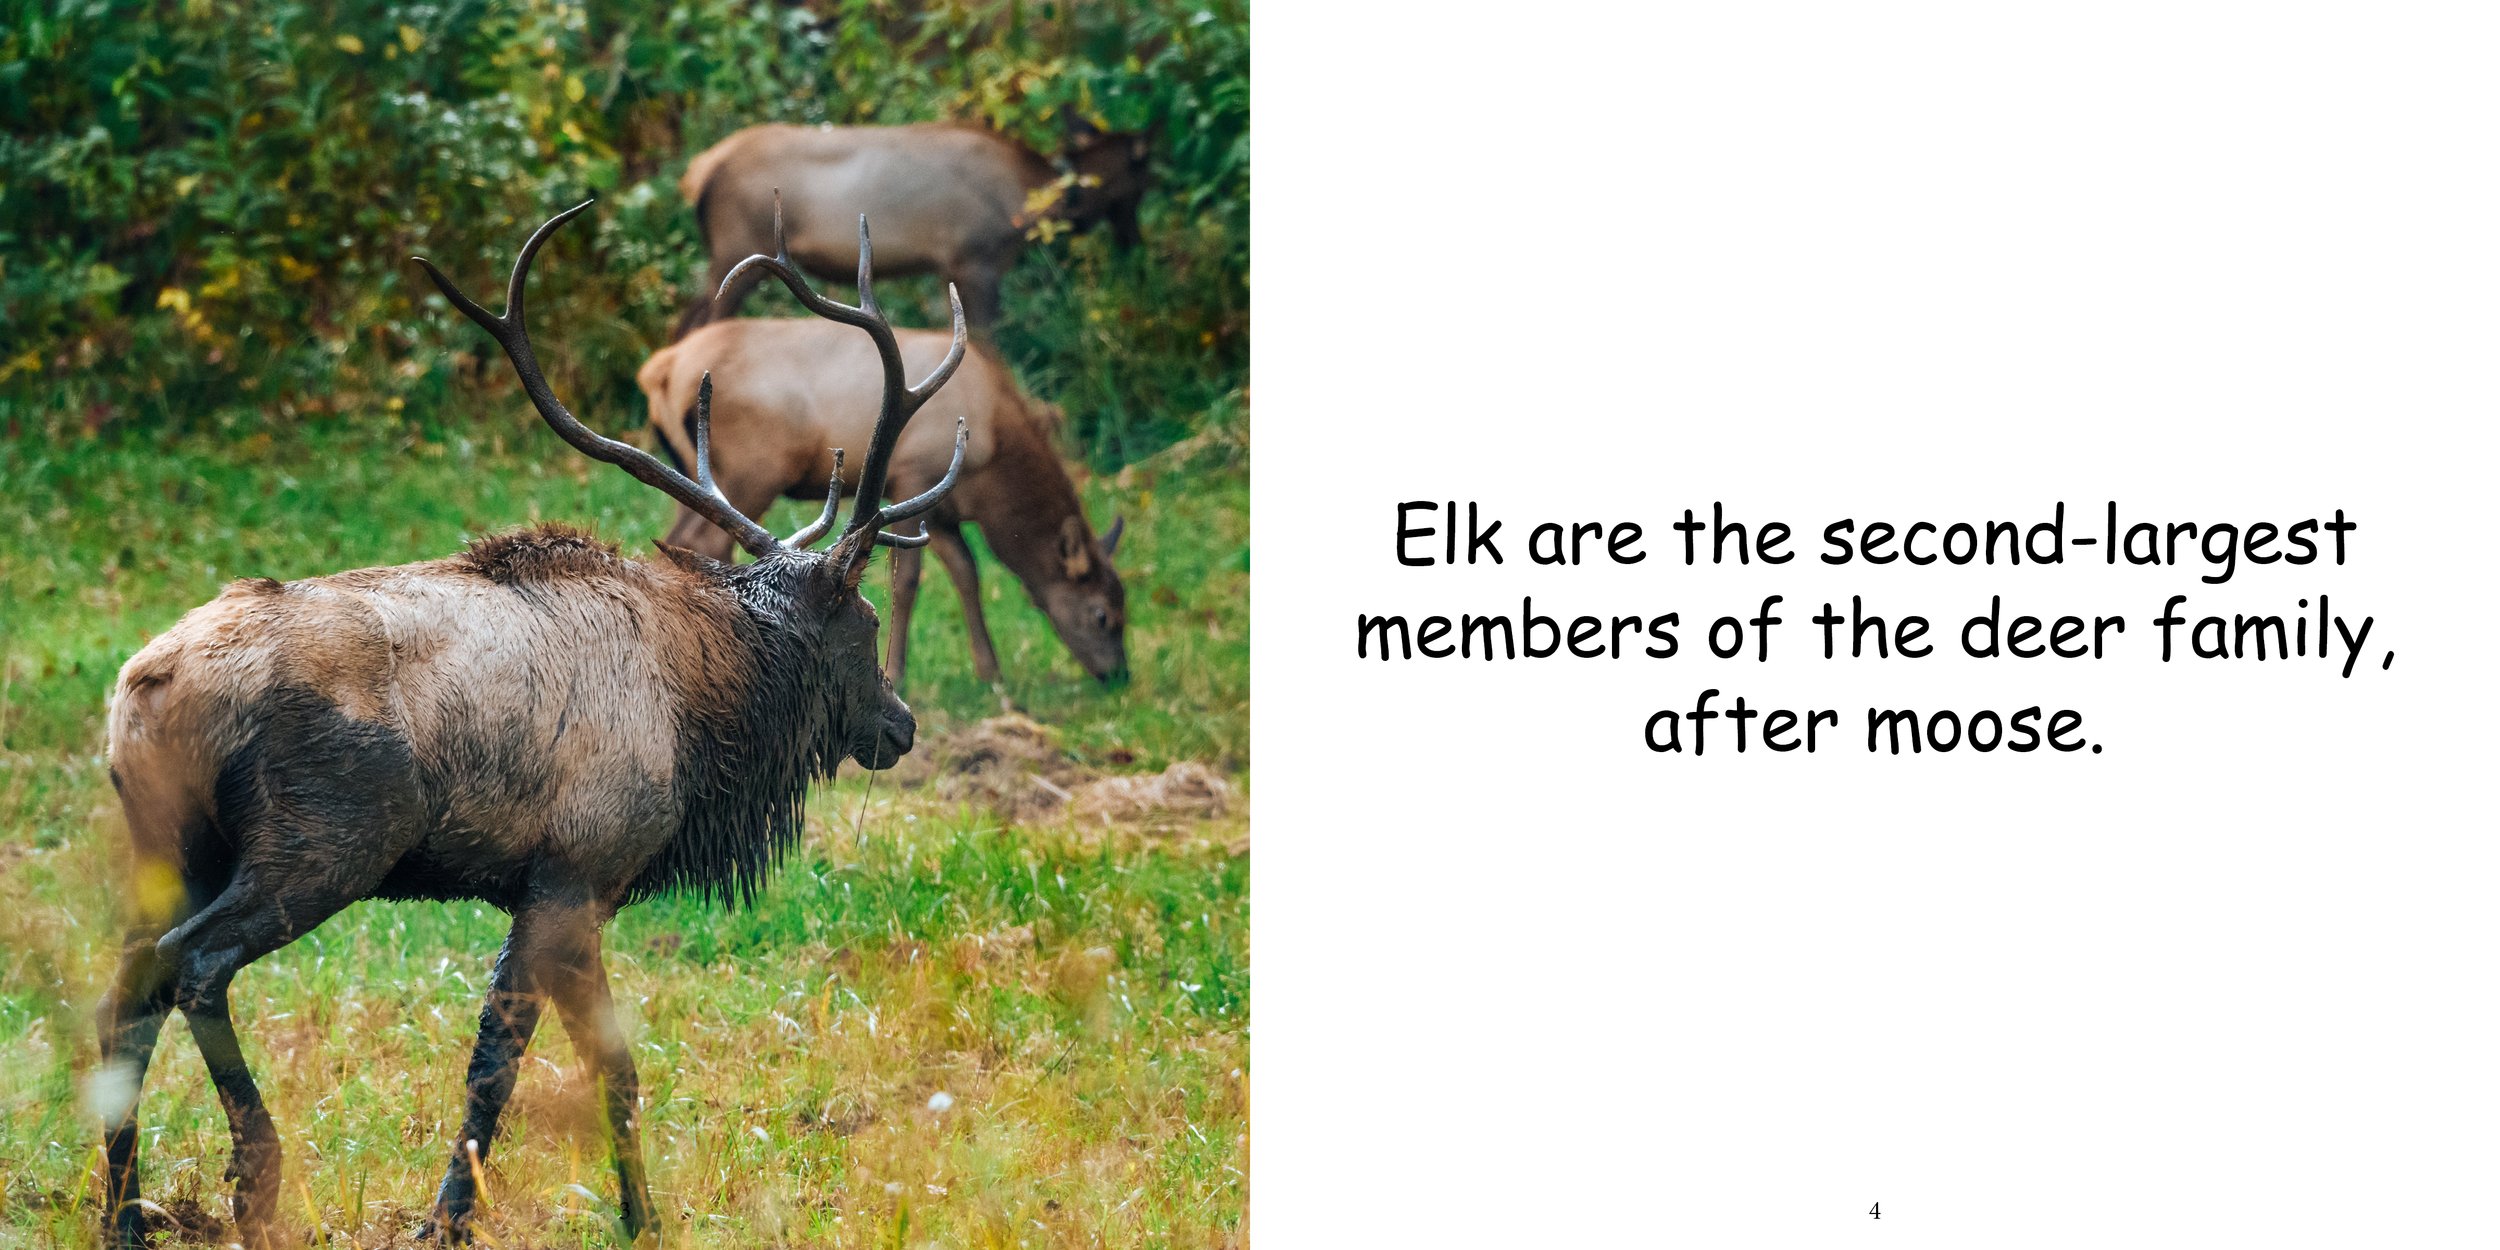 Everything about Elk6.jpg